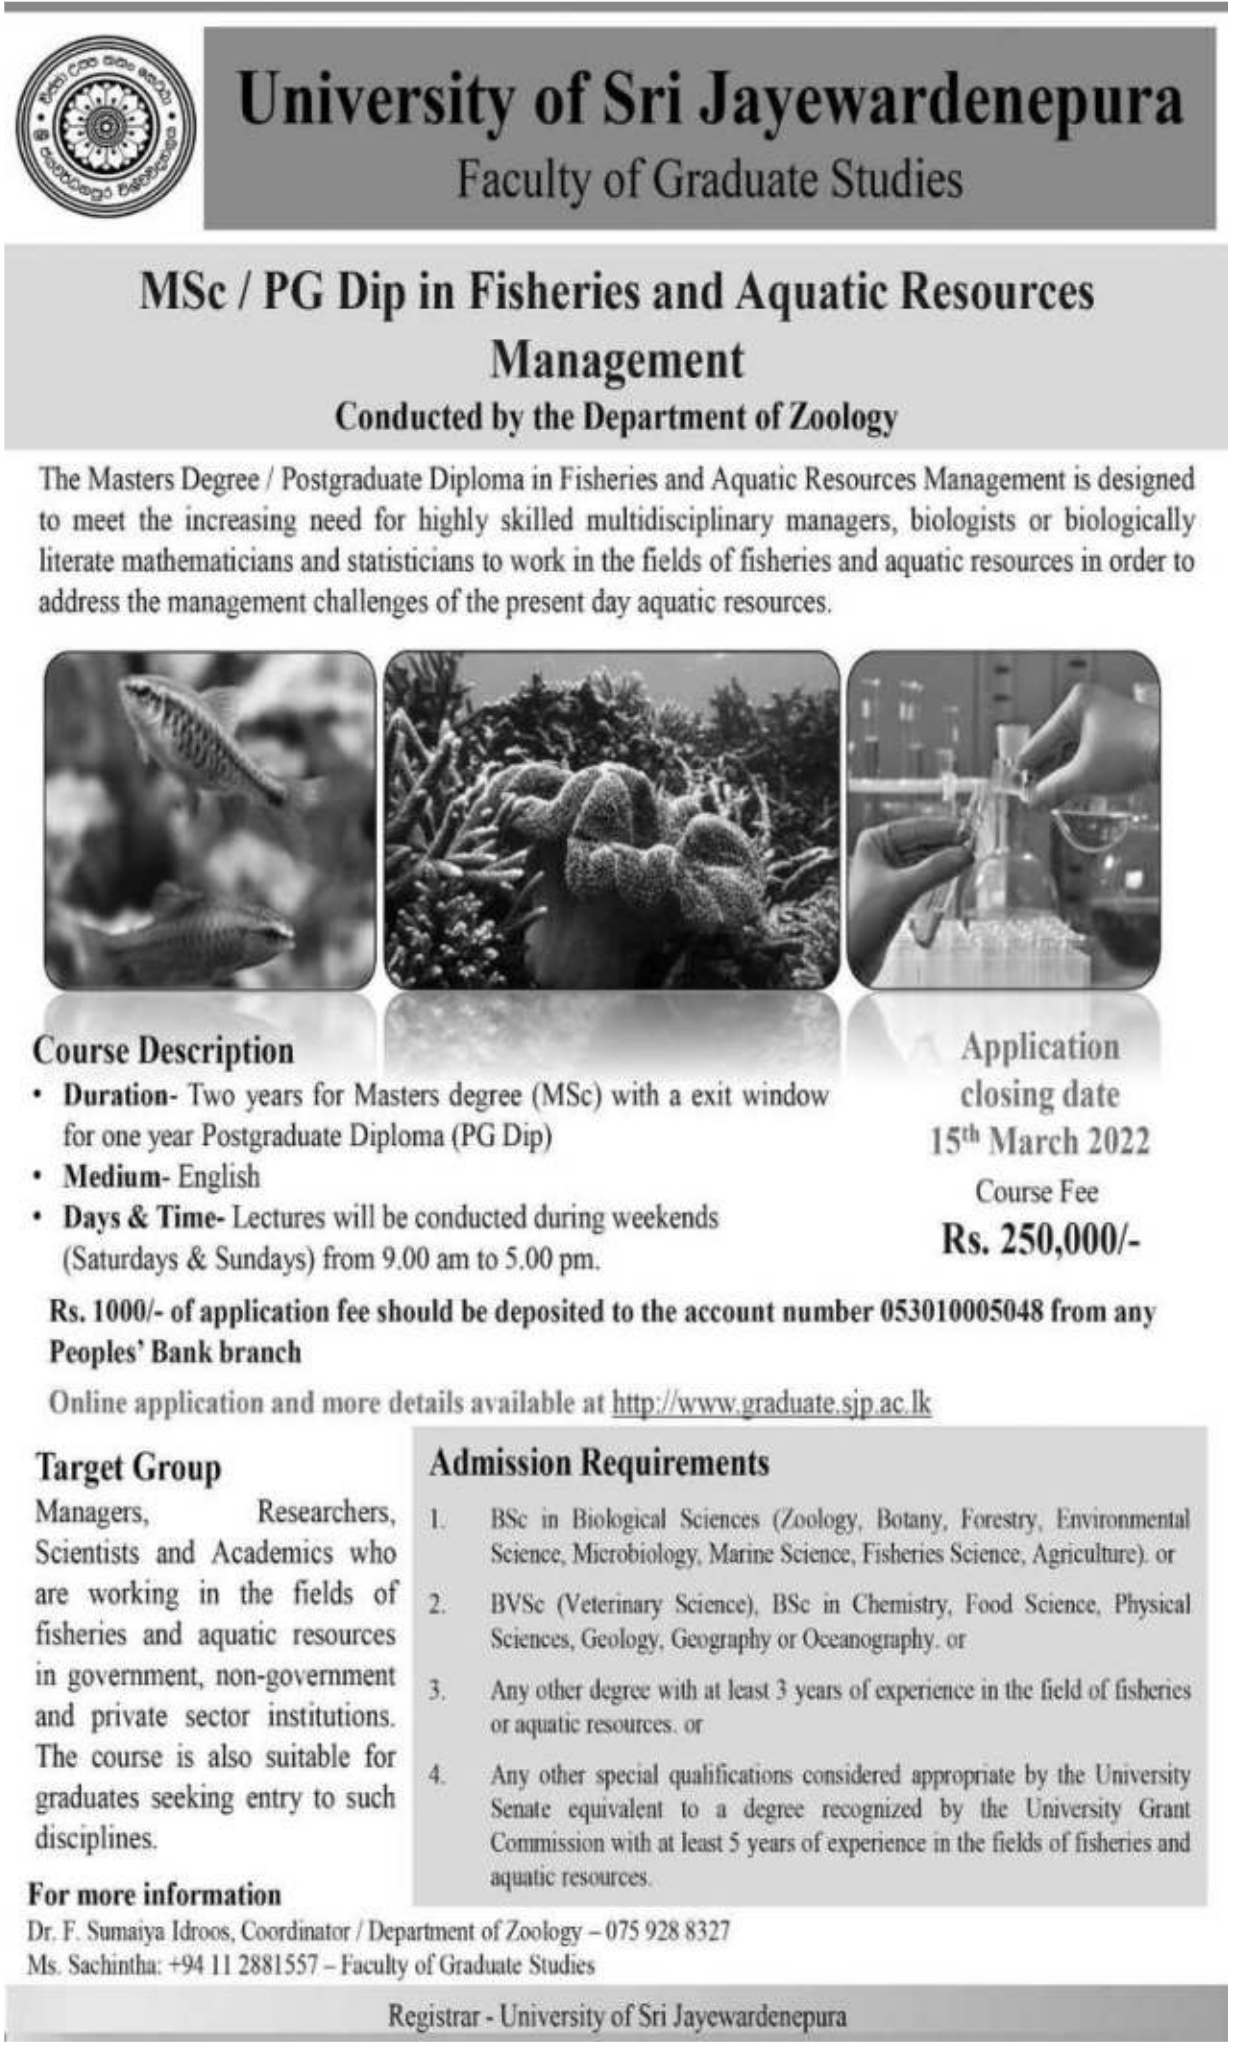 M.Sc. / Post Graduate Diploma in Fisheries and Aquatic Resources Management 2022 – Department of Zoology – University of Sri Jayewardenepura